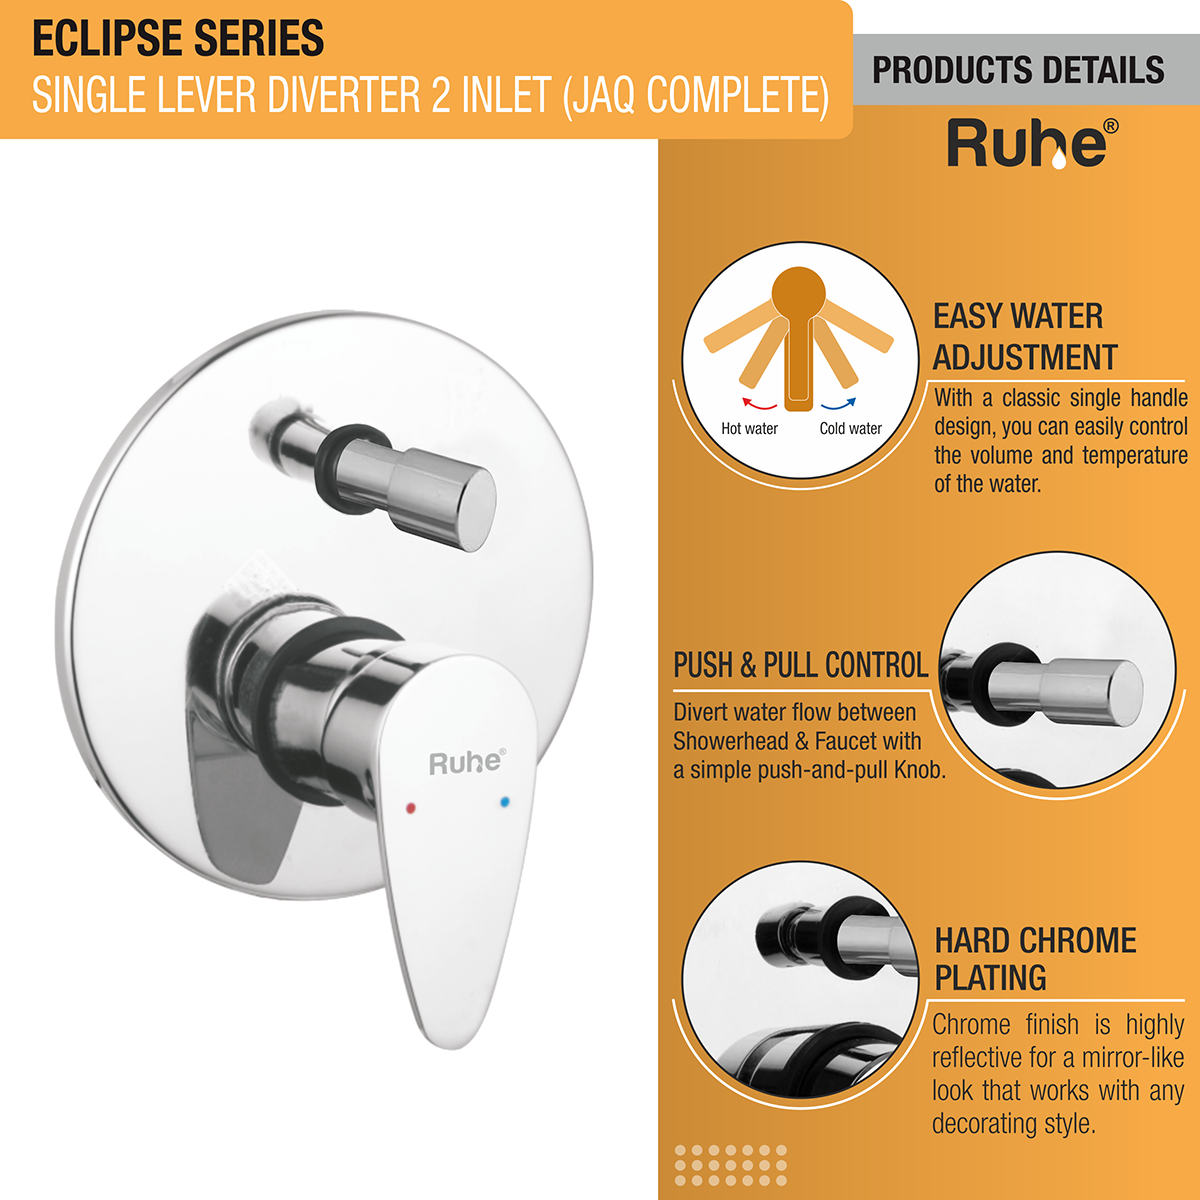 Eclipse Single Lever 2-inlet Diverter (JAQ Complete Set) product details